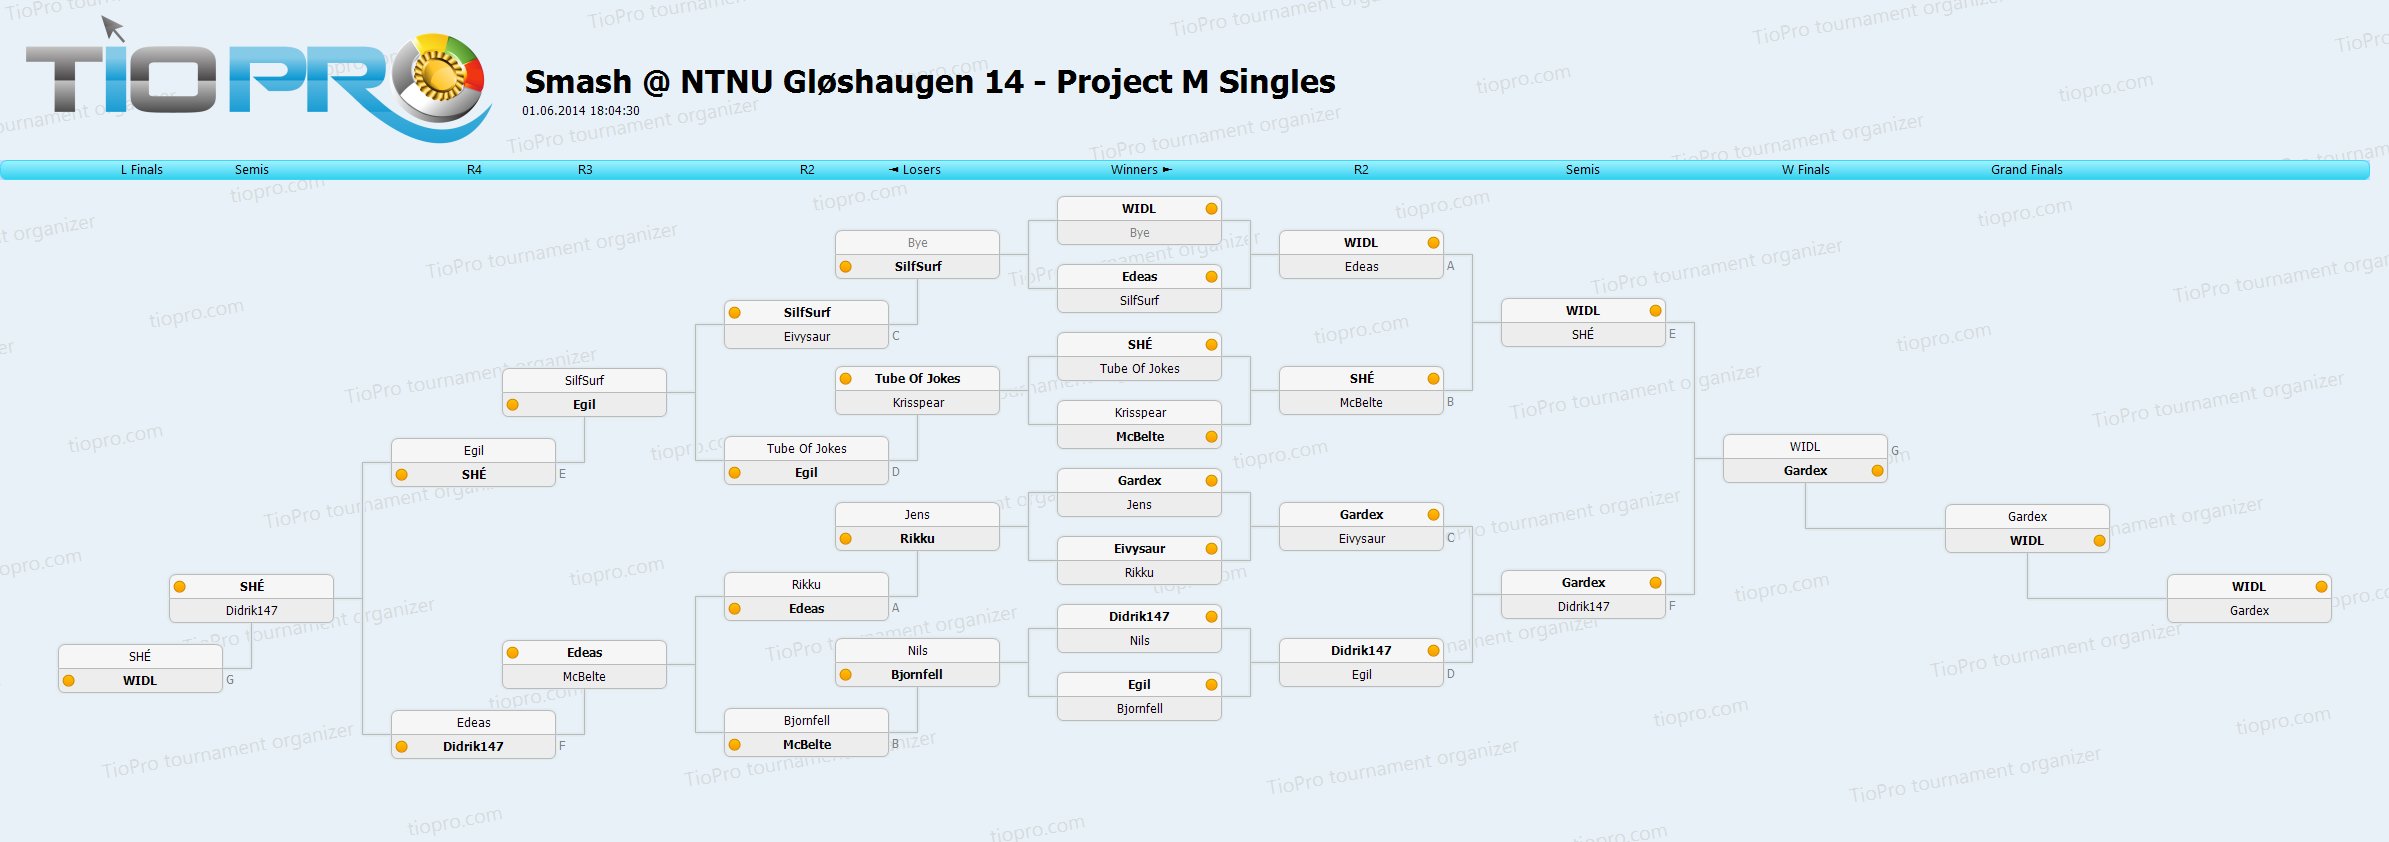 S@NG 31.05.2014 - Project M Singles